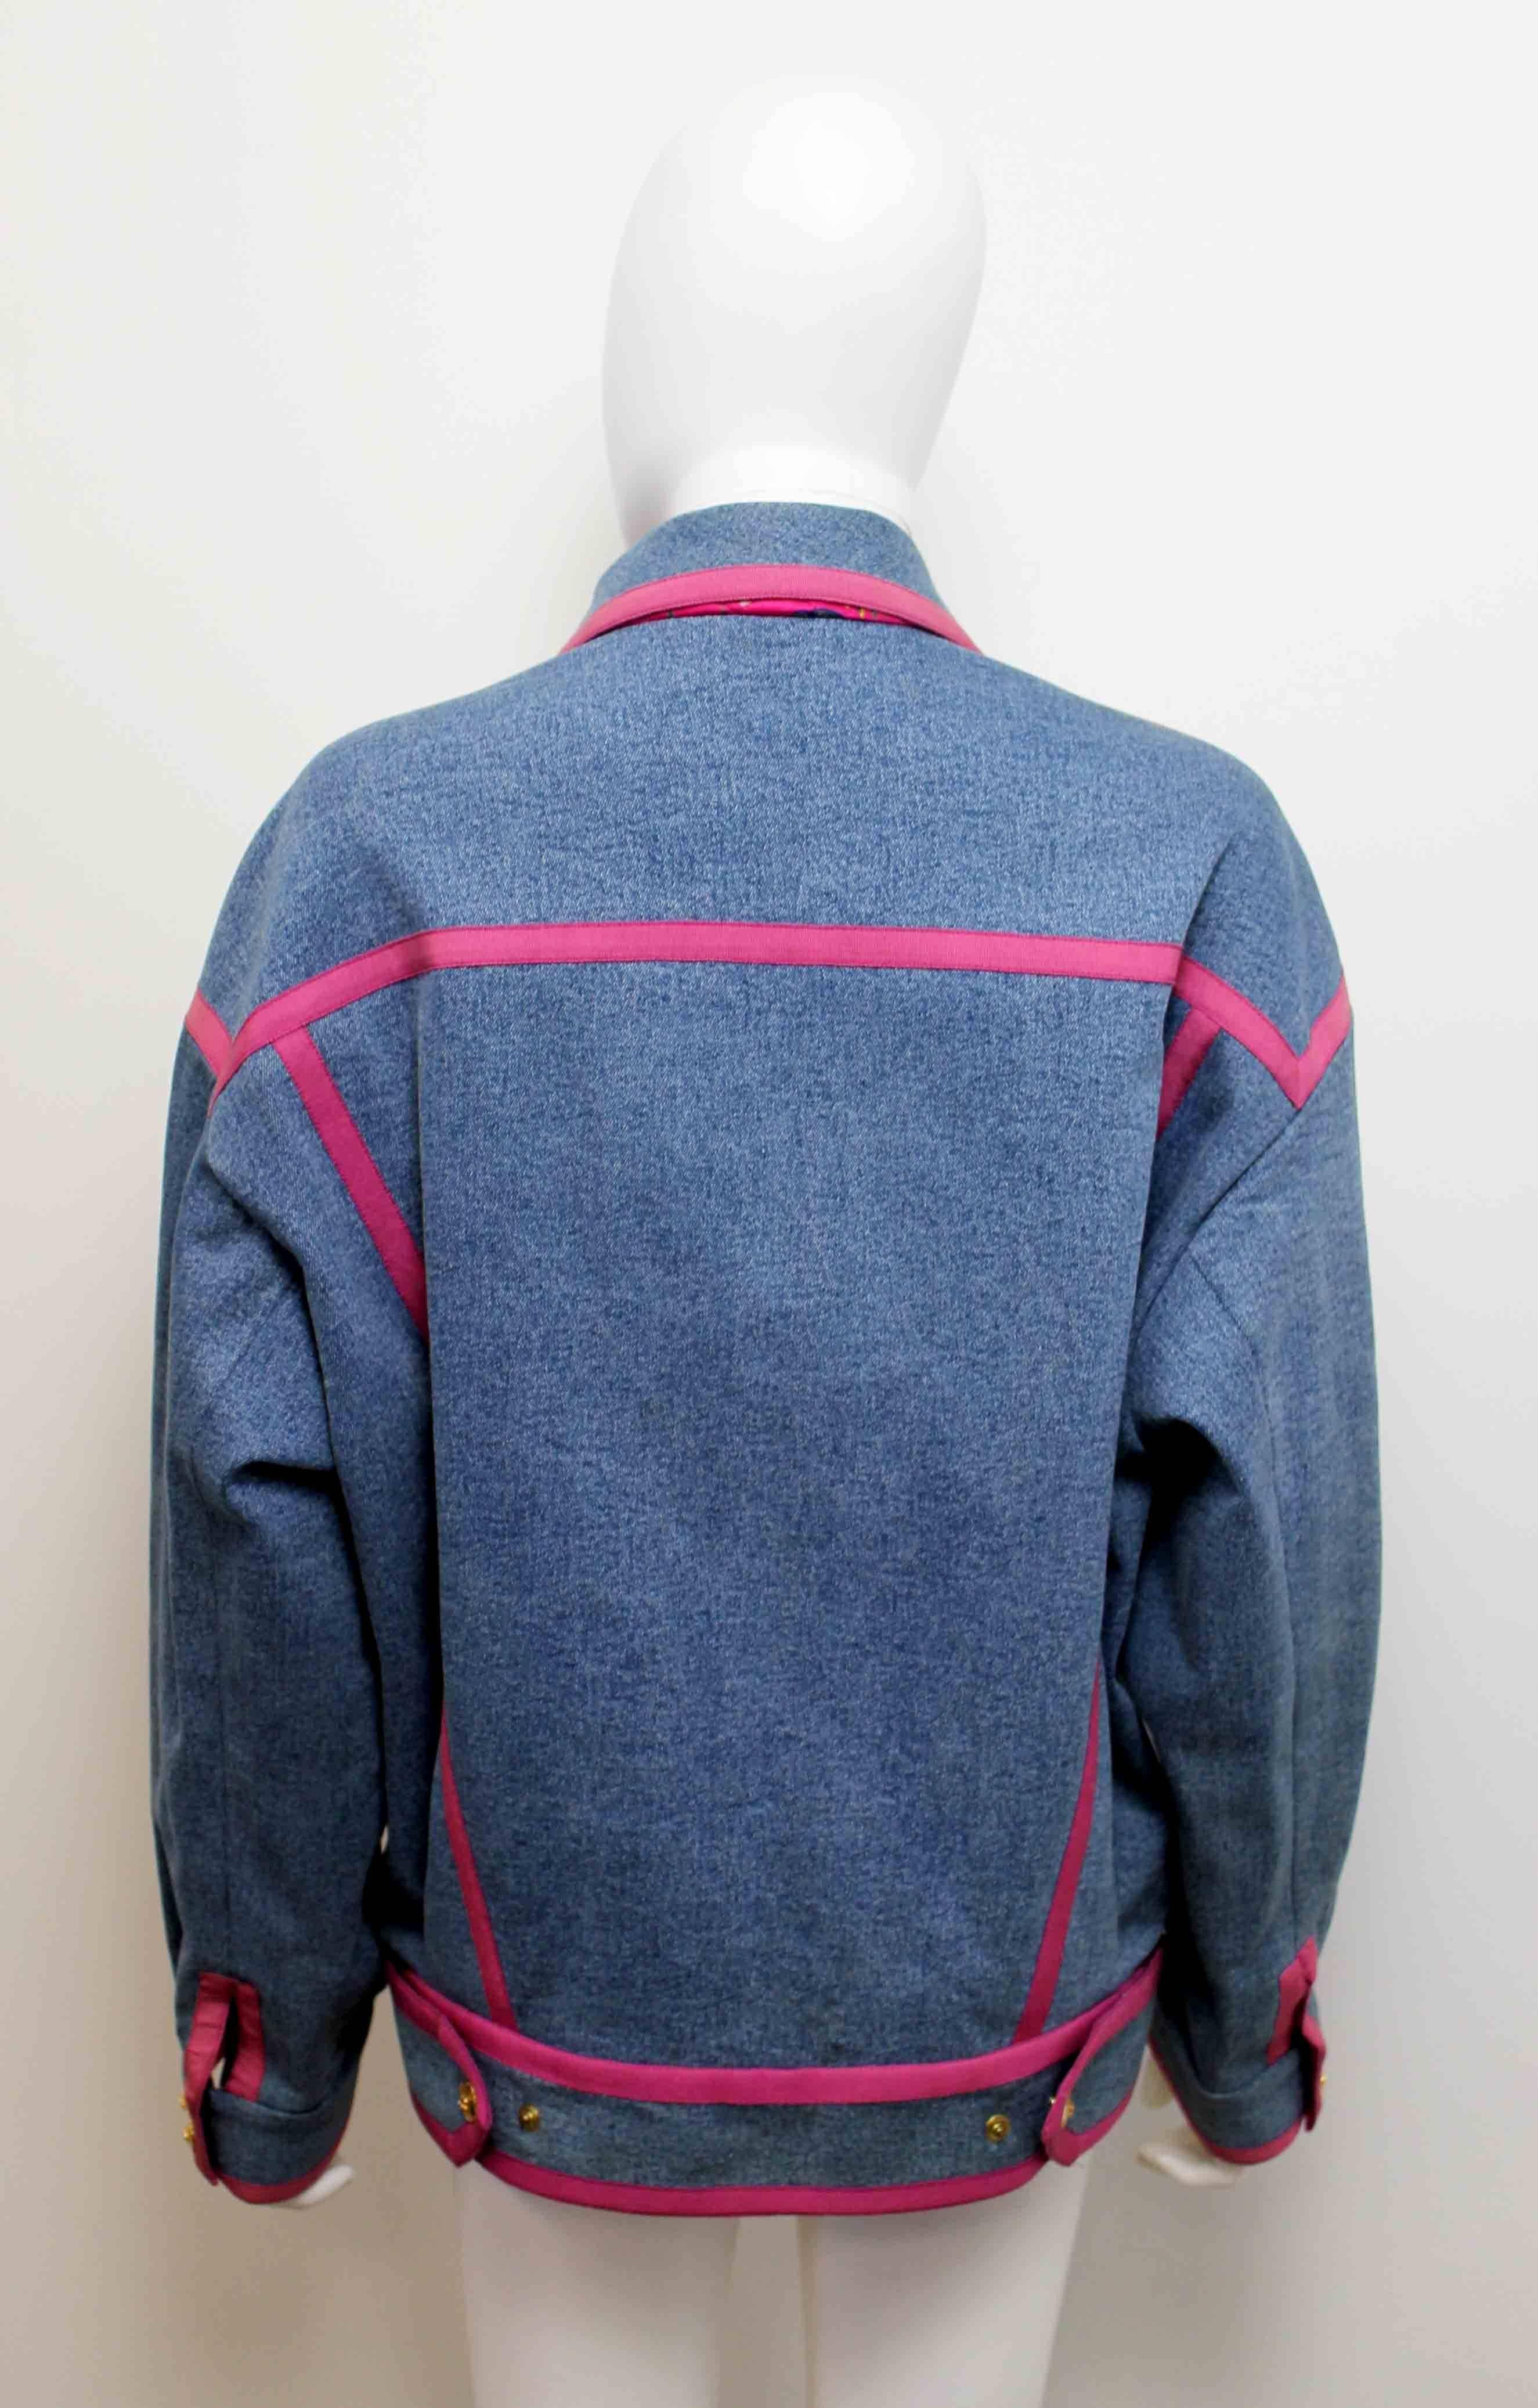 Gray Chanel S/S 1991 'hip hop collection' jacket worn by Linda Evangelista